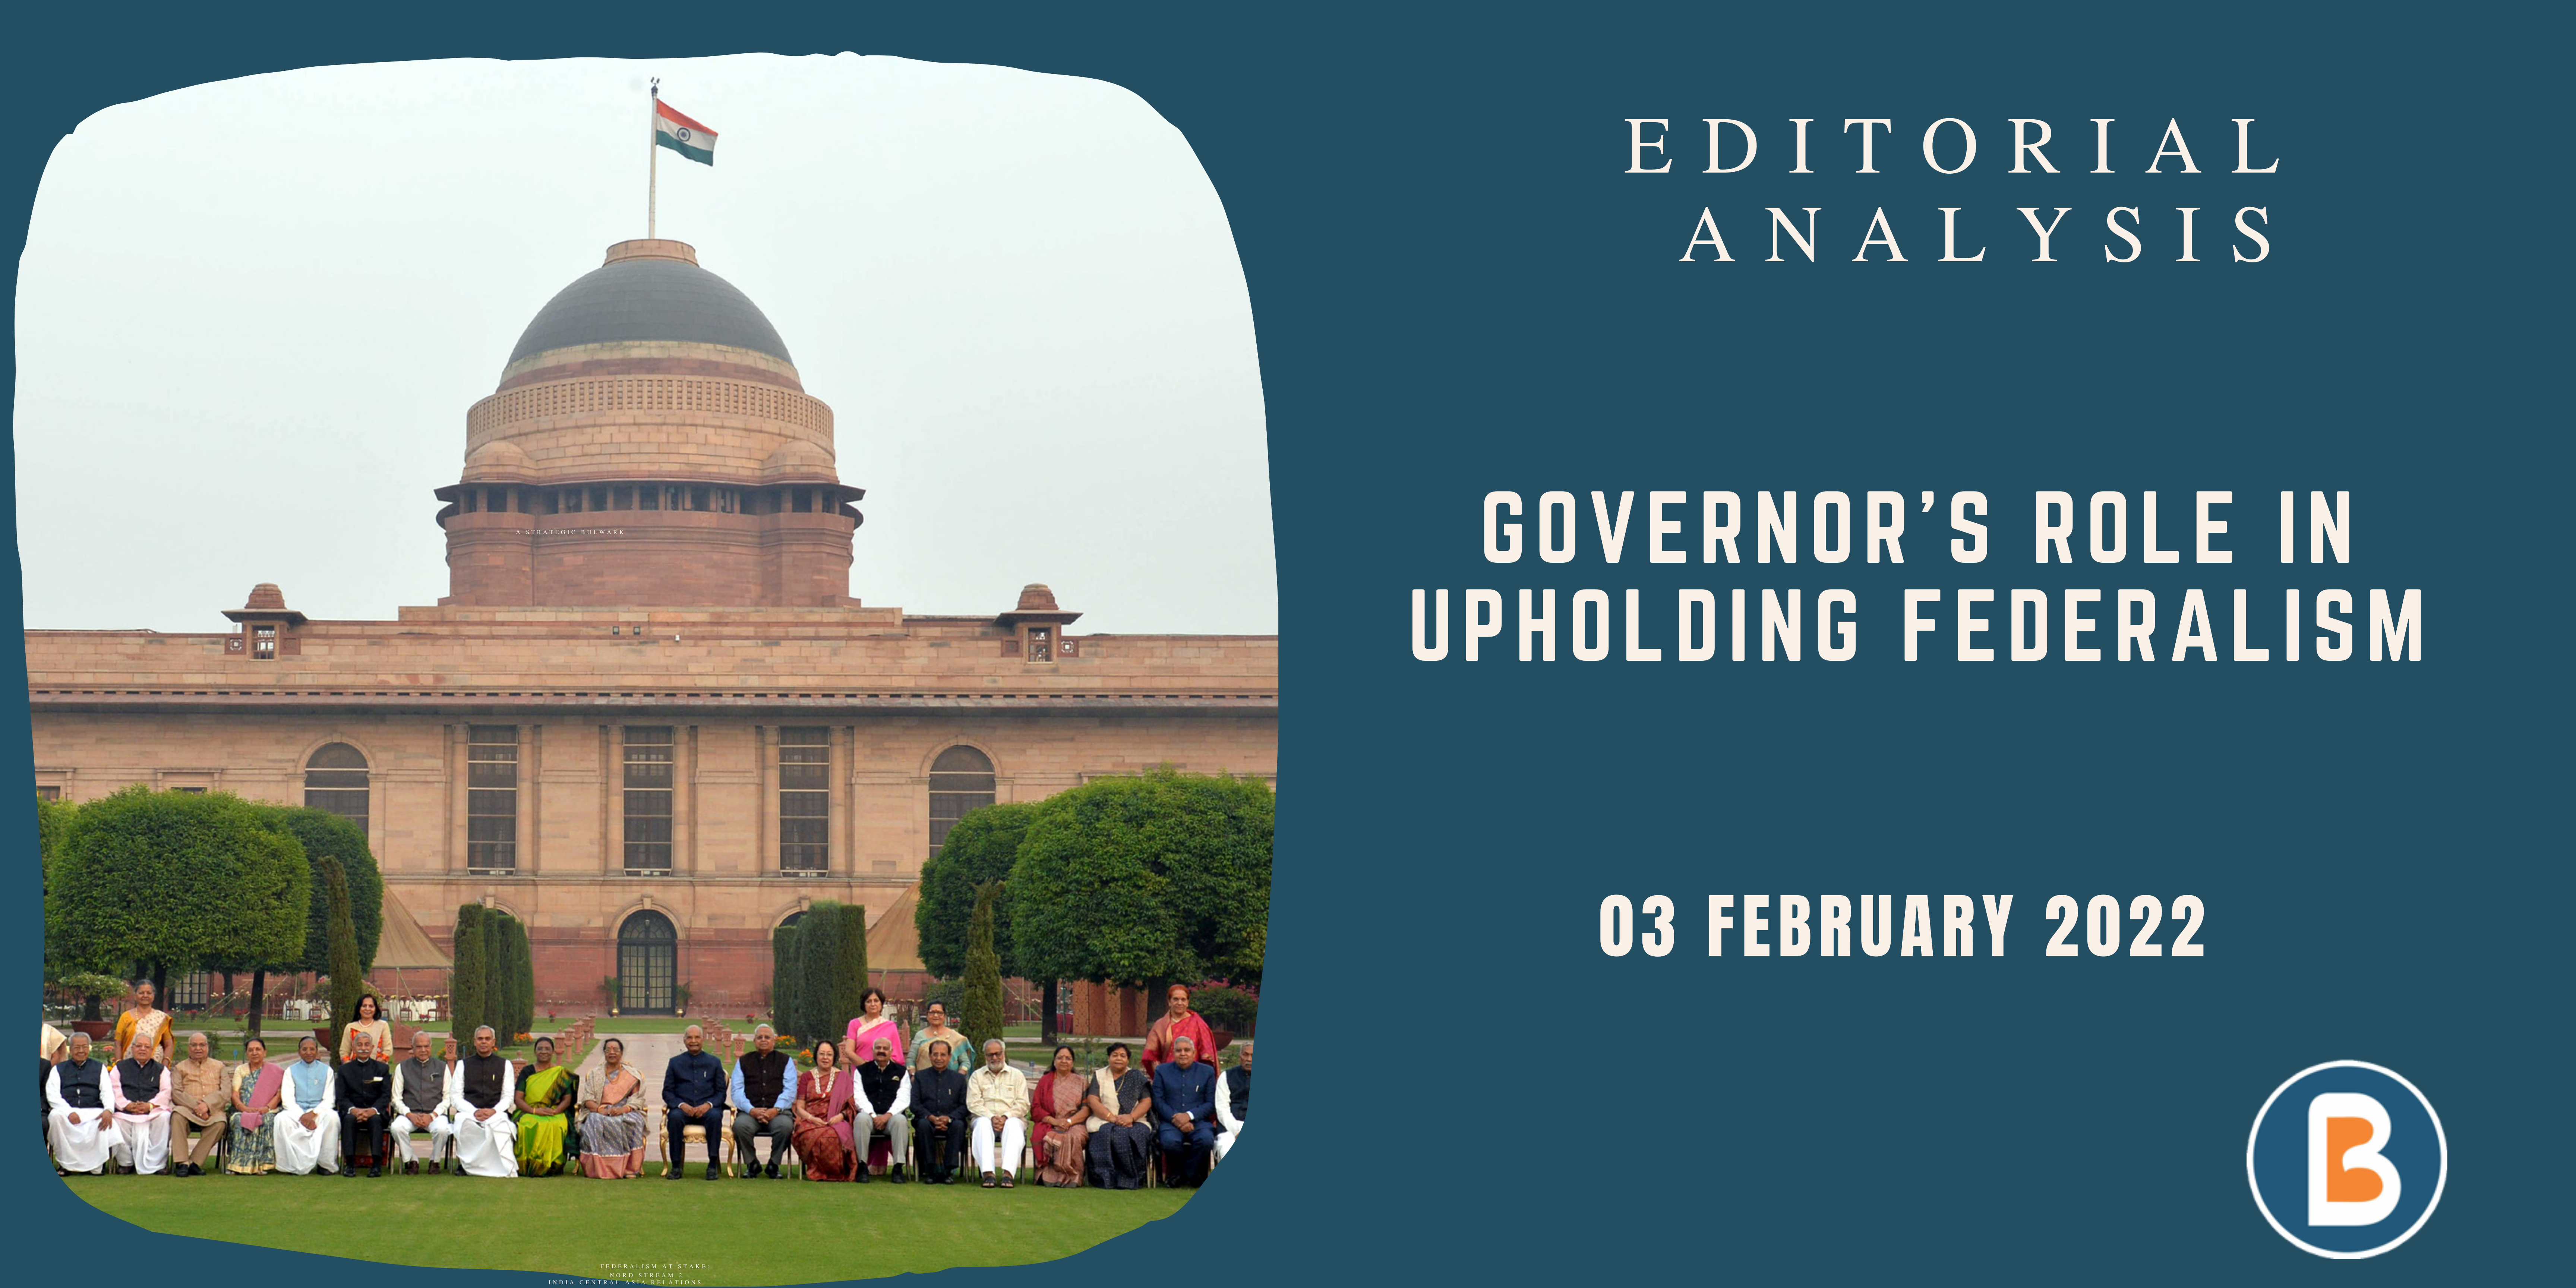 Editorial Analysis for UPSC - India – UK FTA